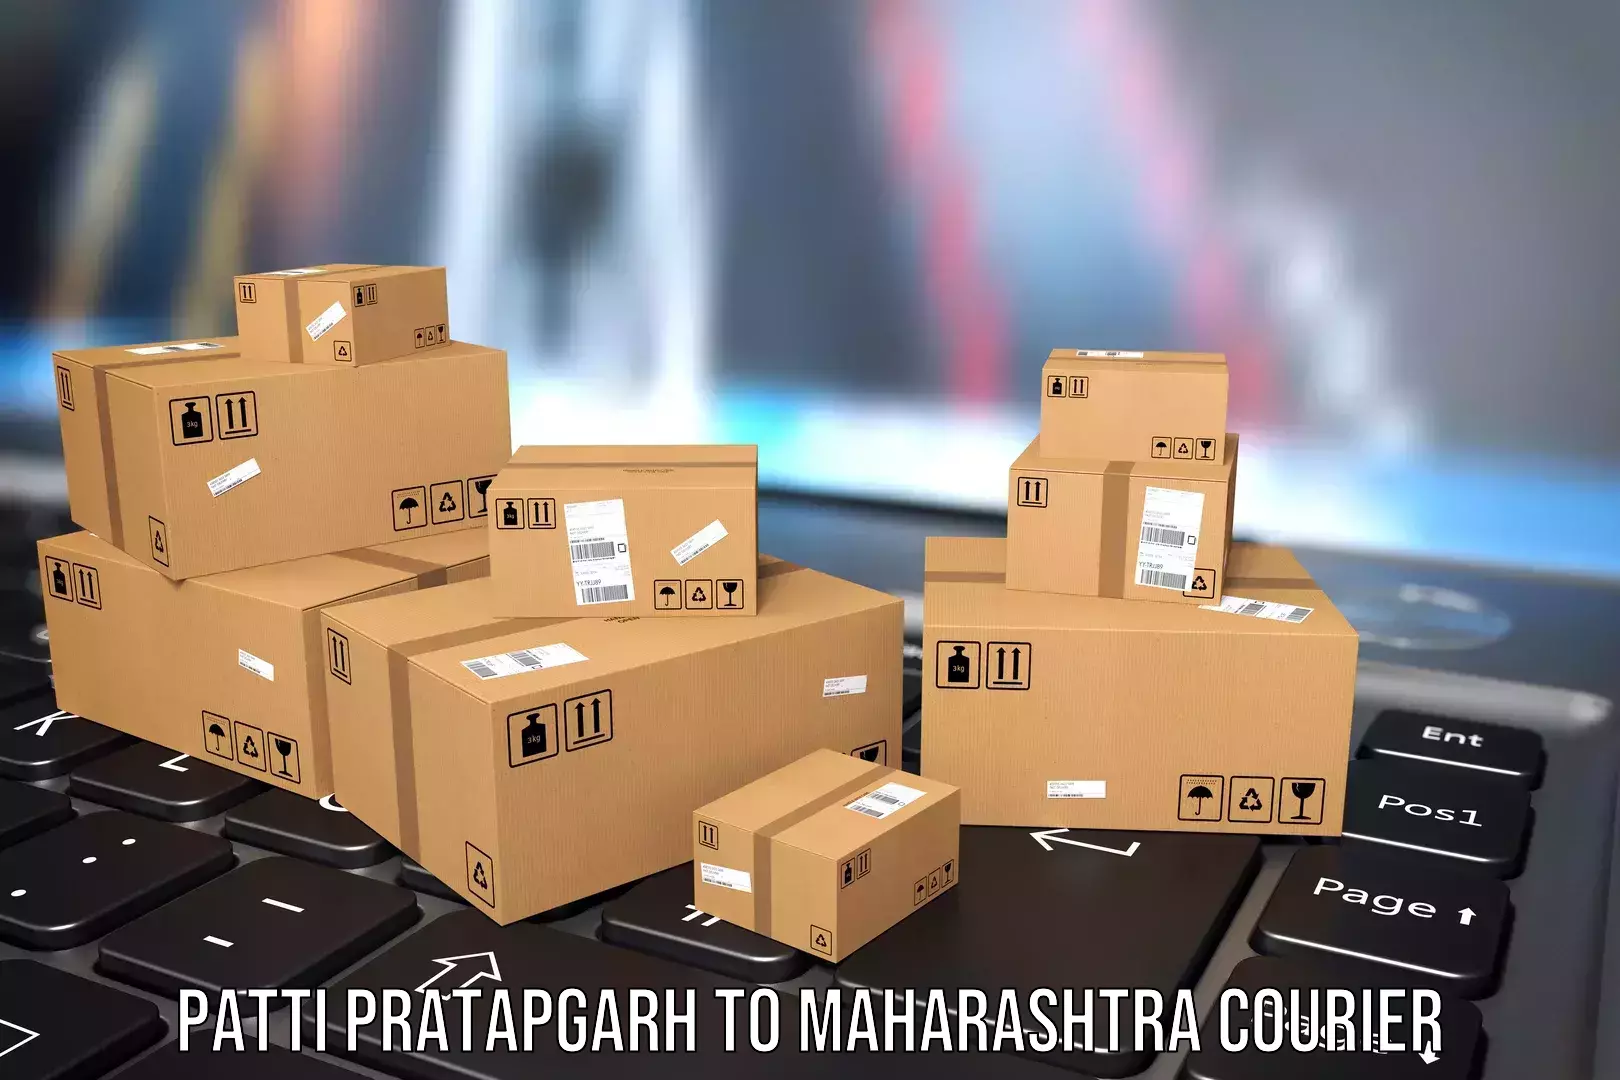 Hassle-free luggage shipping Patti Pratapgarh to Georai